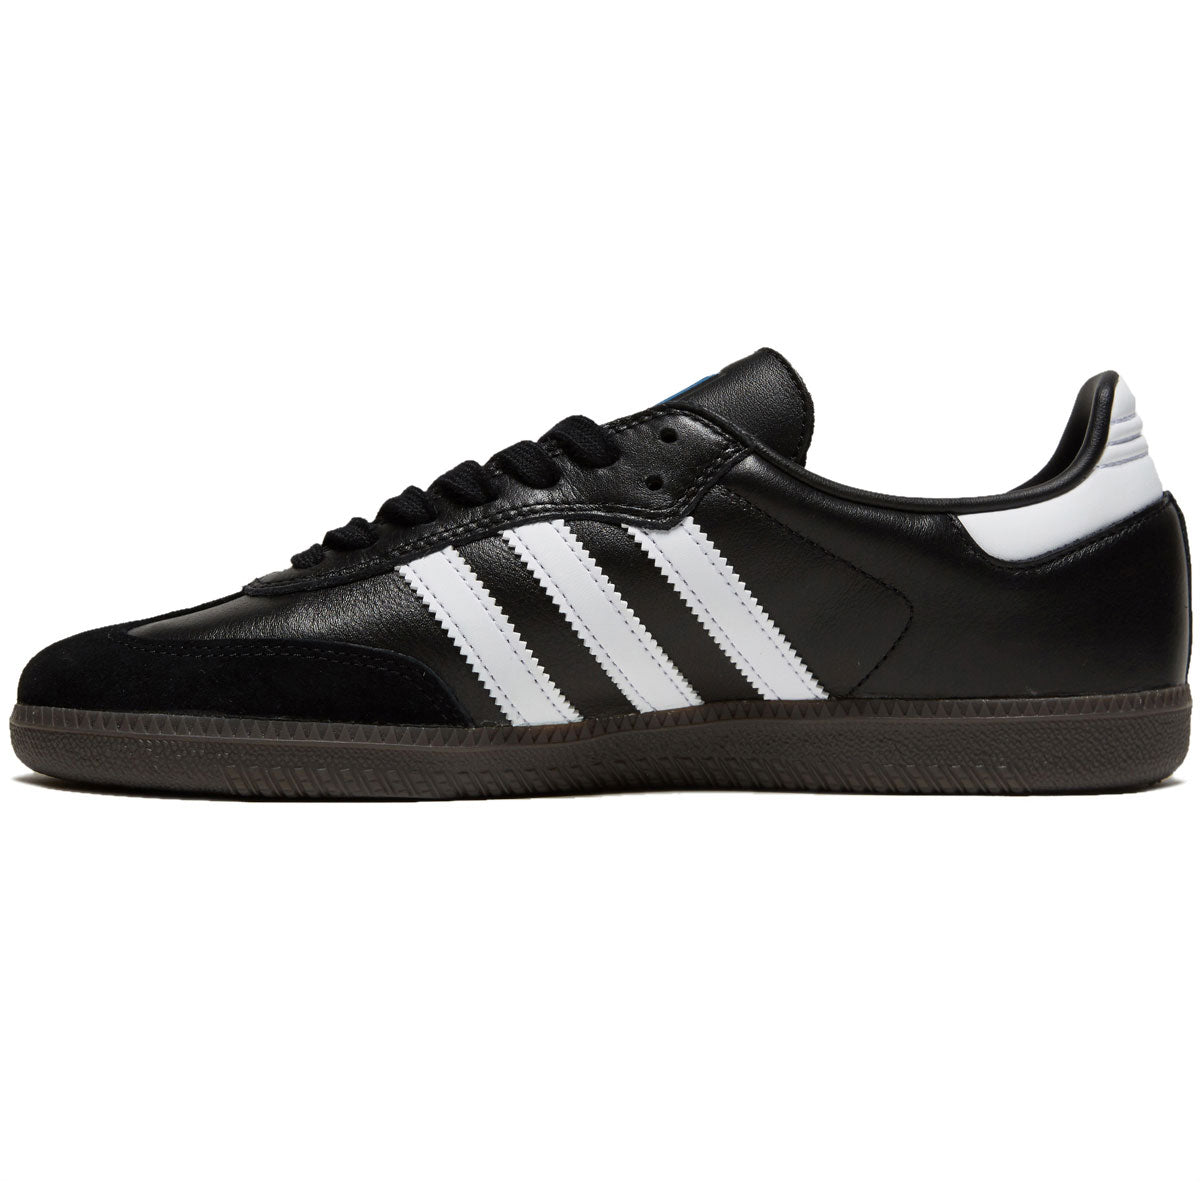 Adidas Samba ADV Shoes - New Black/White/Gum image 2